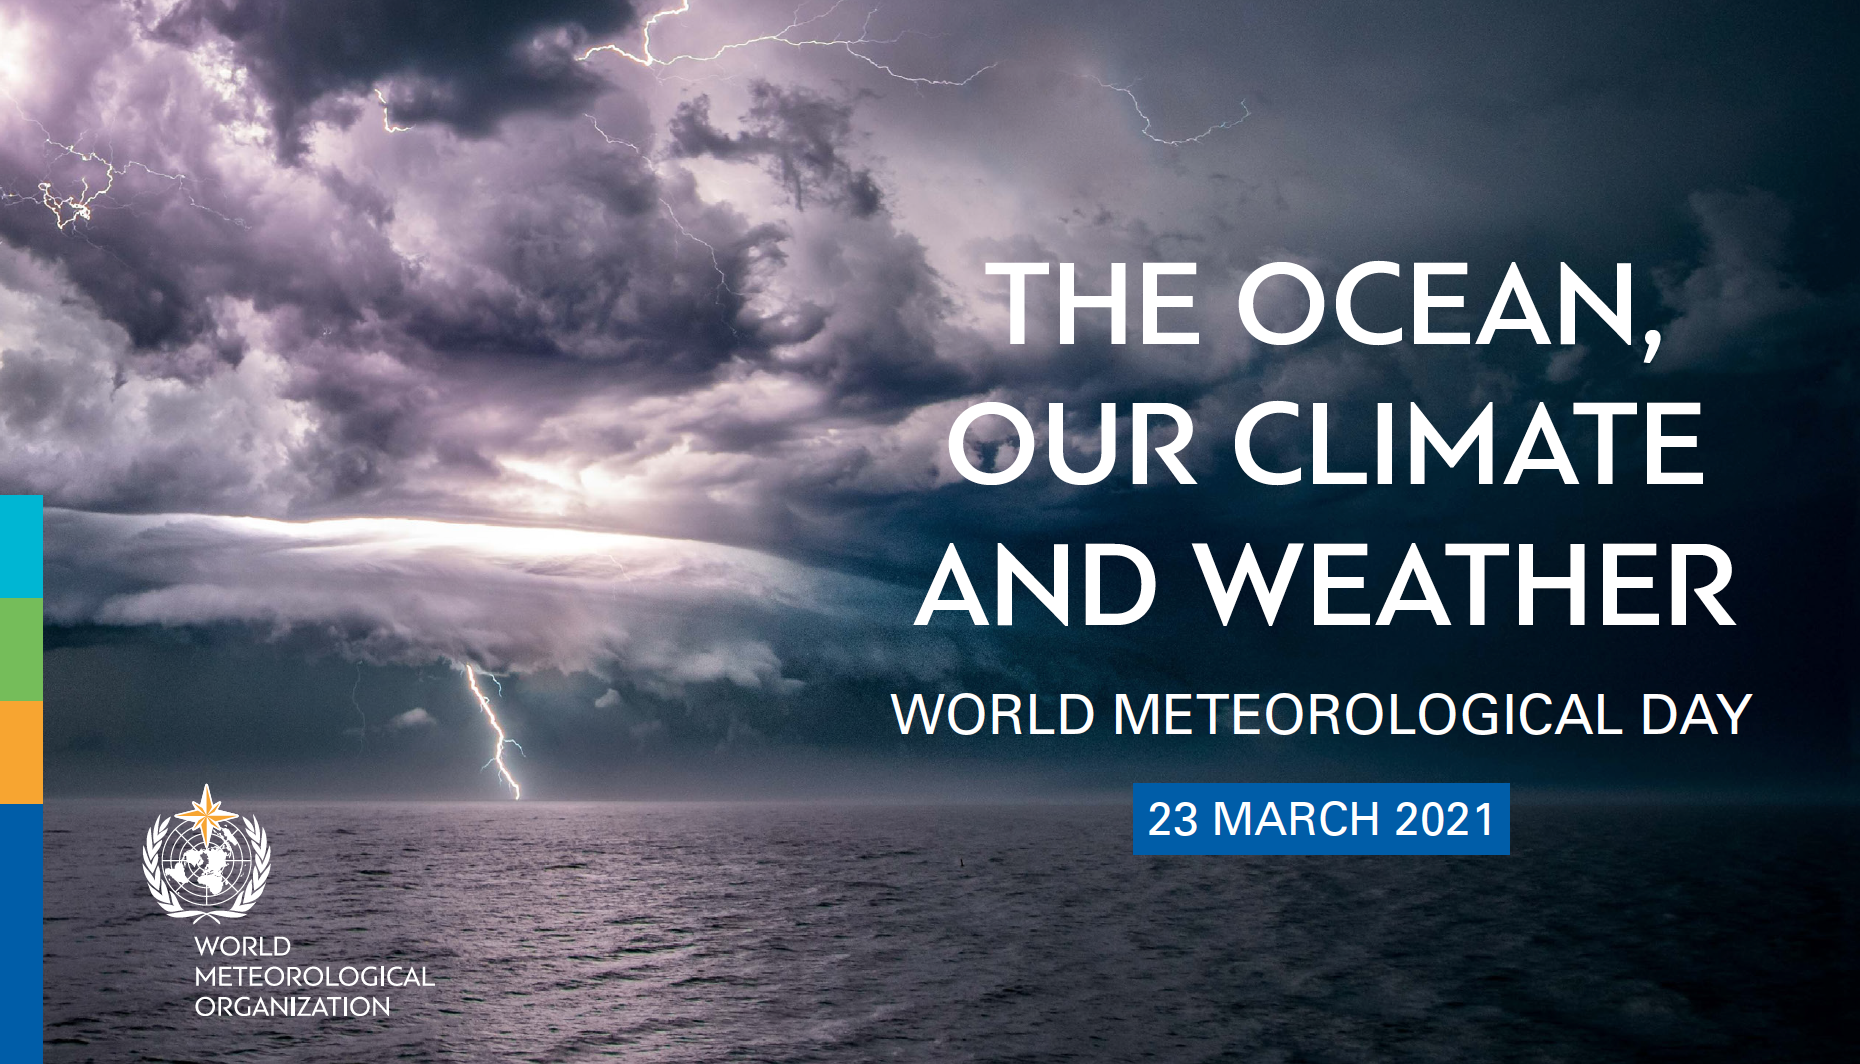 World Meteorological Day celebrates the ocean